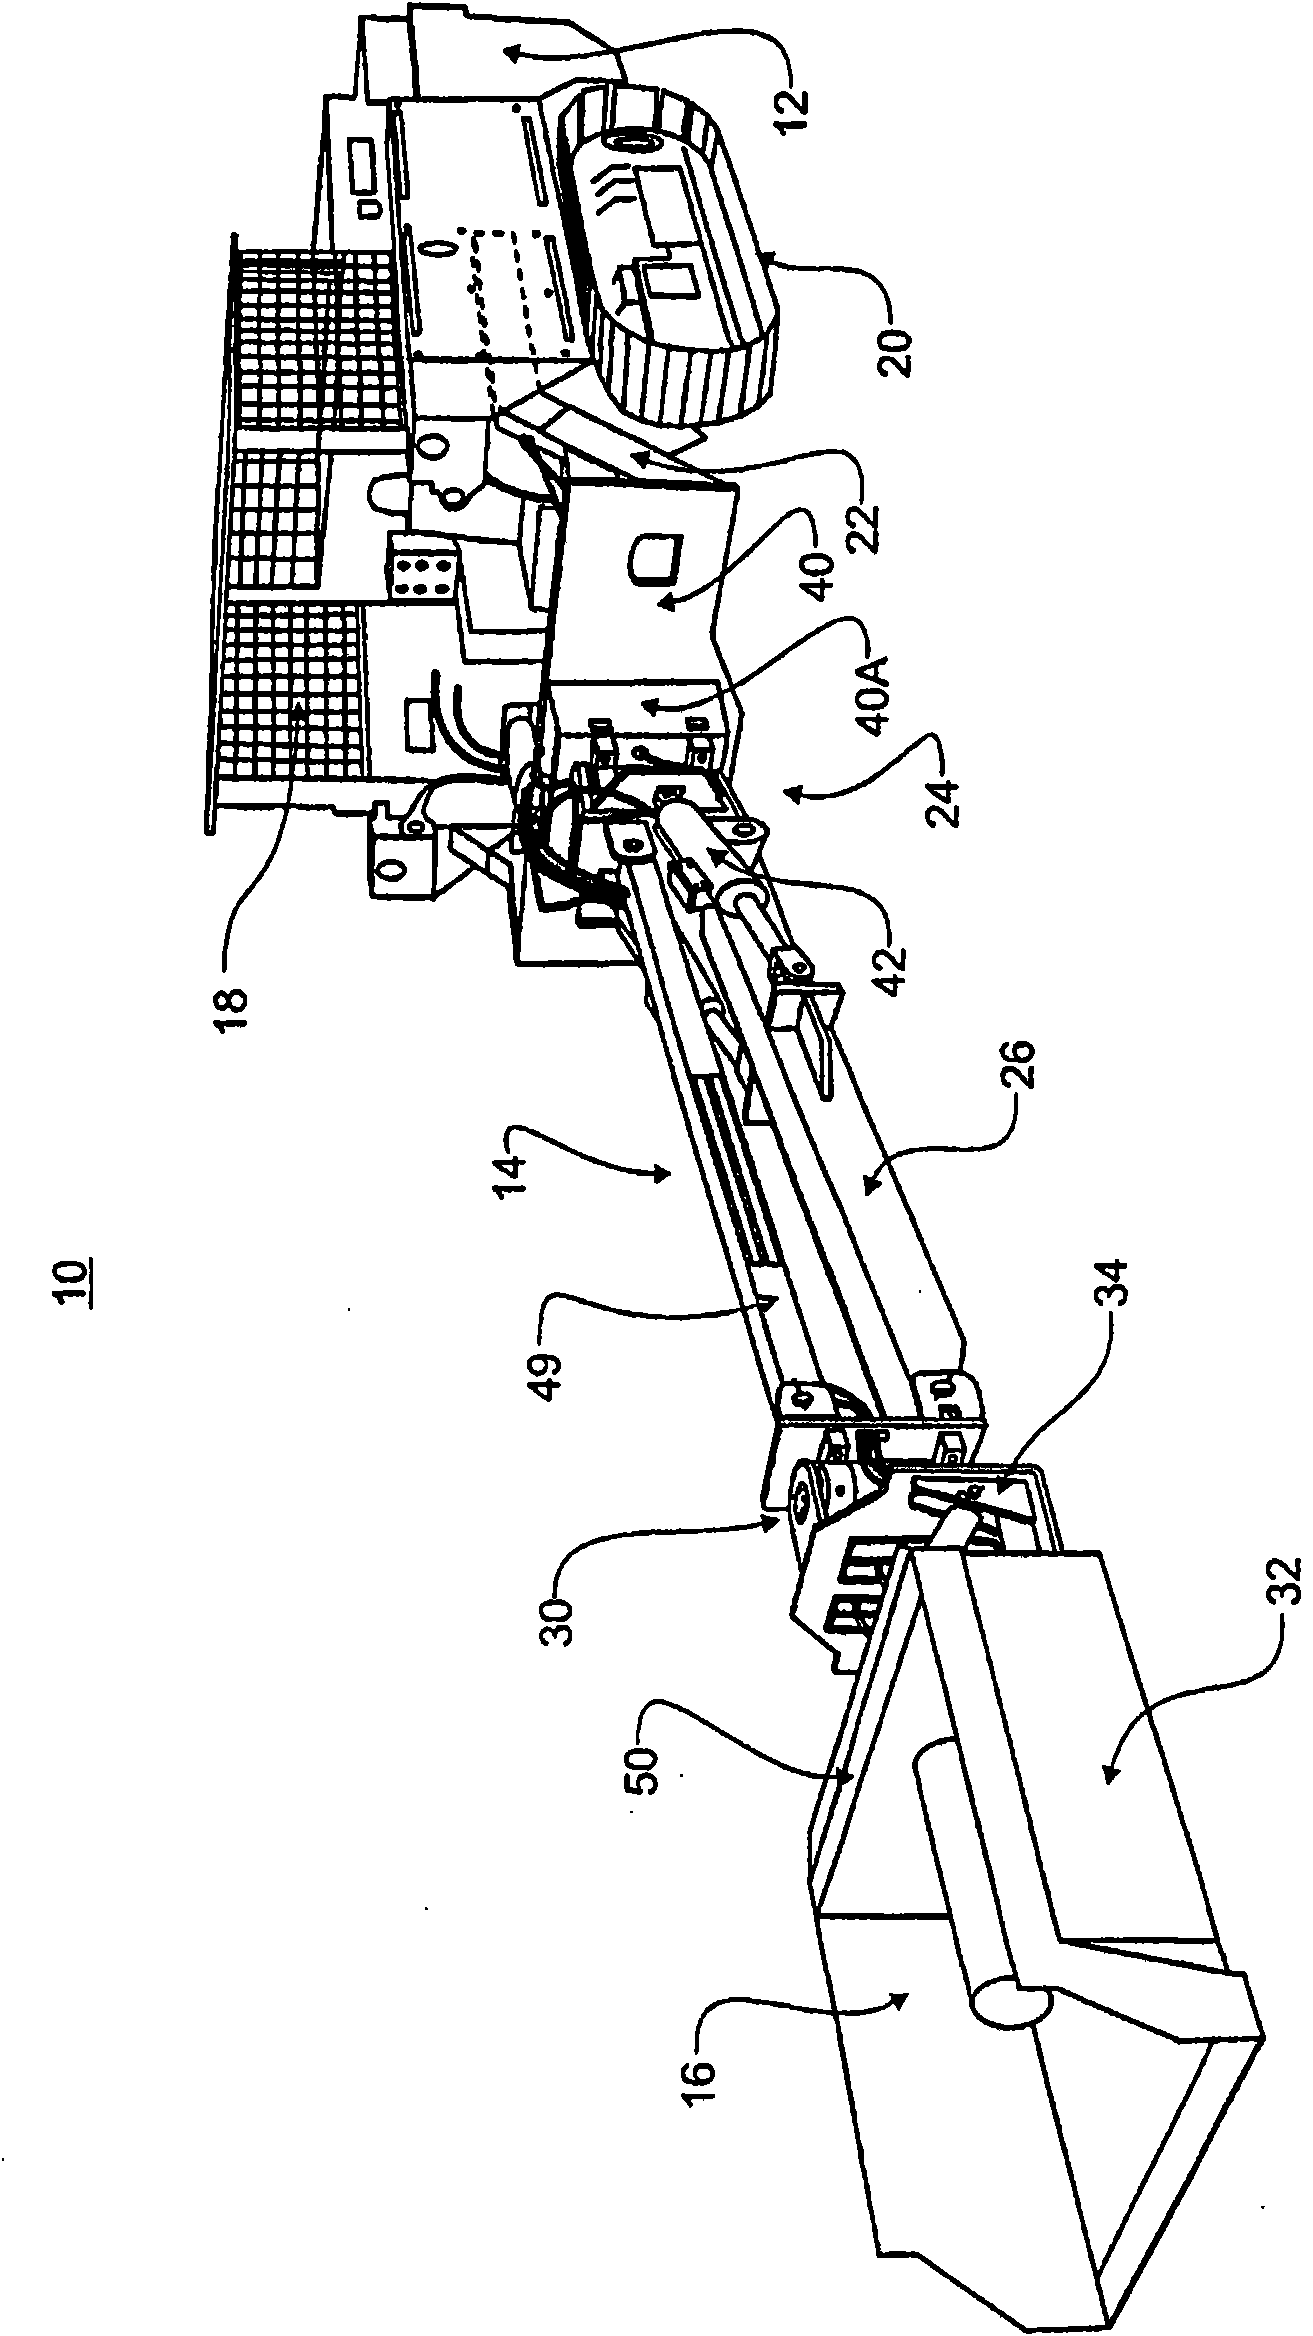 Shoveling apparatus with multi-positional shovel